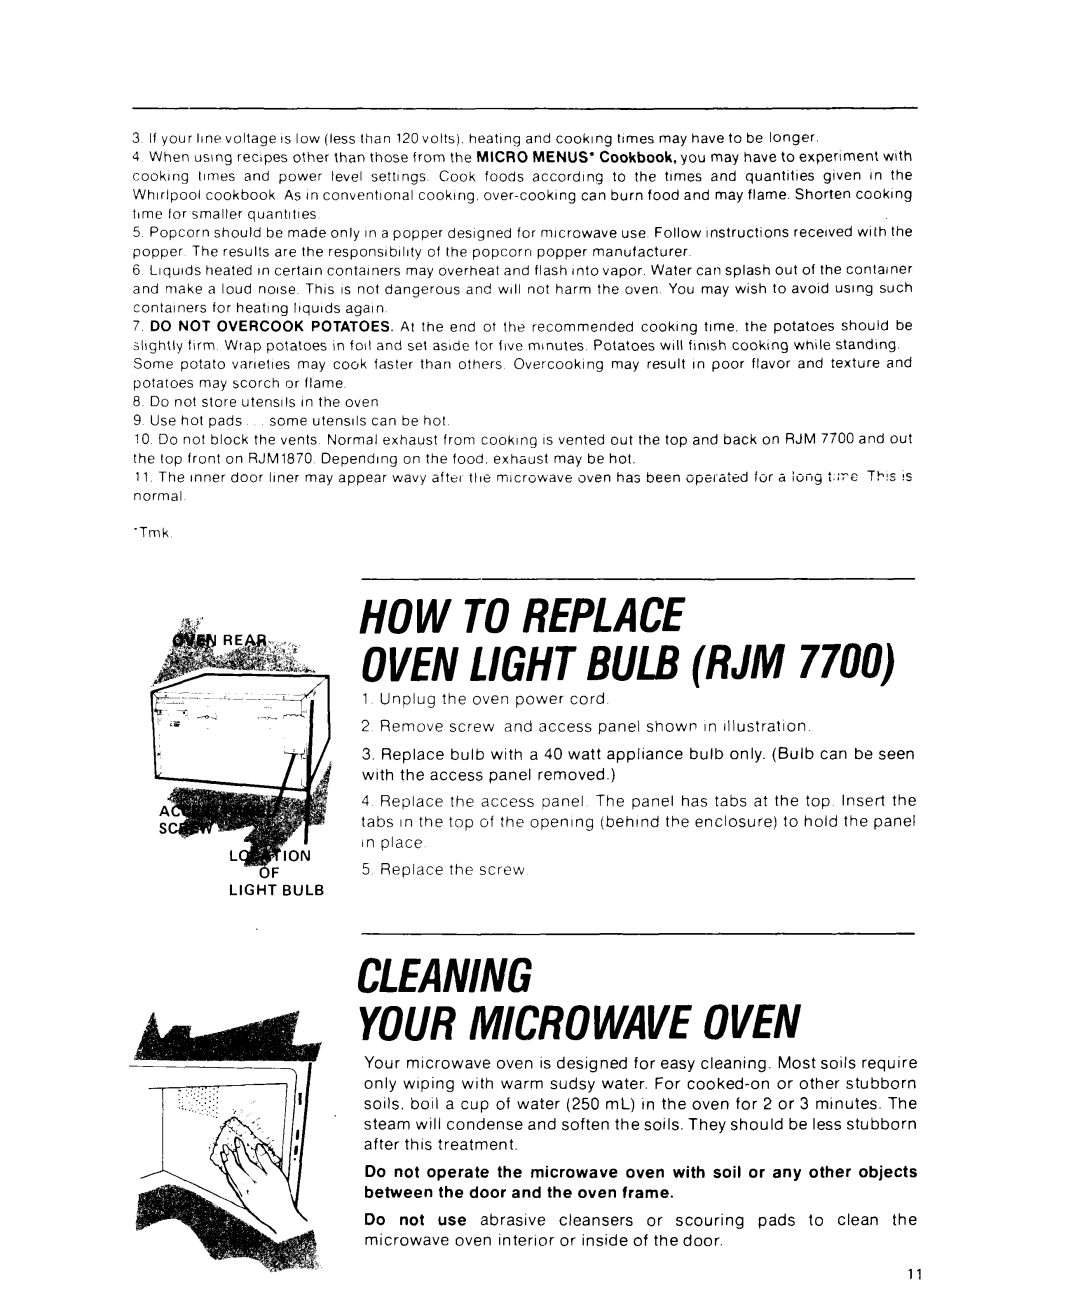 Whirlpool RJM 1870, RJM 7700 manual HOWTOREPLACE OVEN1lGHTBULBRIM, Cleaning Yourmicrowaveoven 